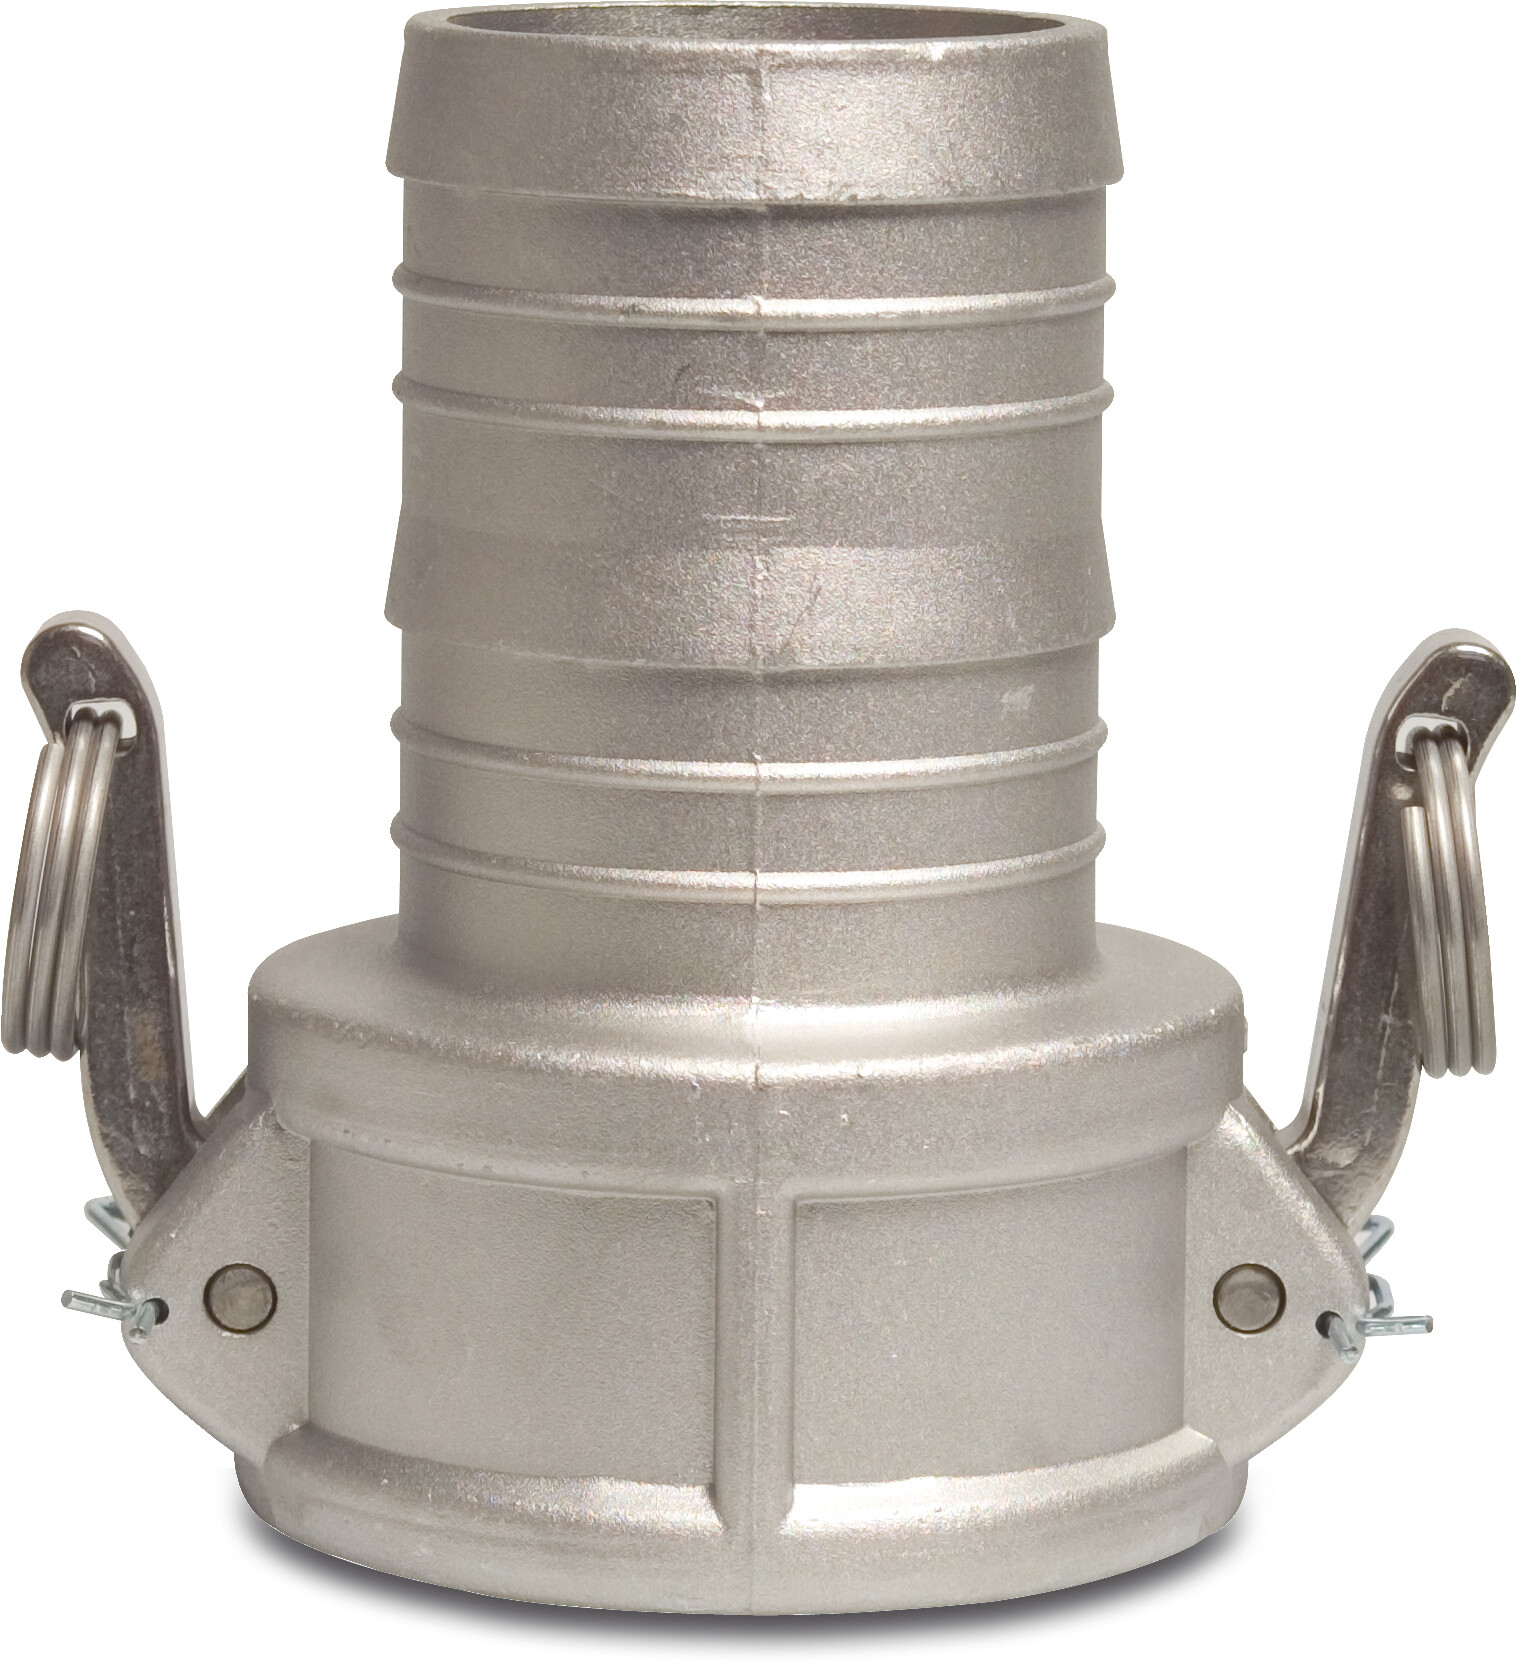 Snelkoppeling aluminium 1" x 25 mm M-deel Camlock x slangtule 16bar type Camlock C